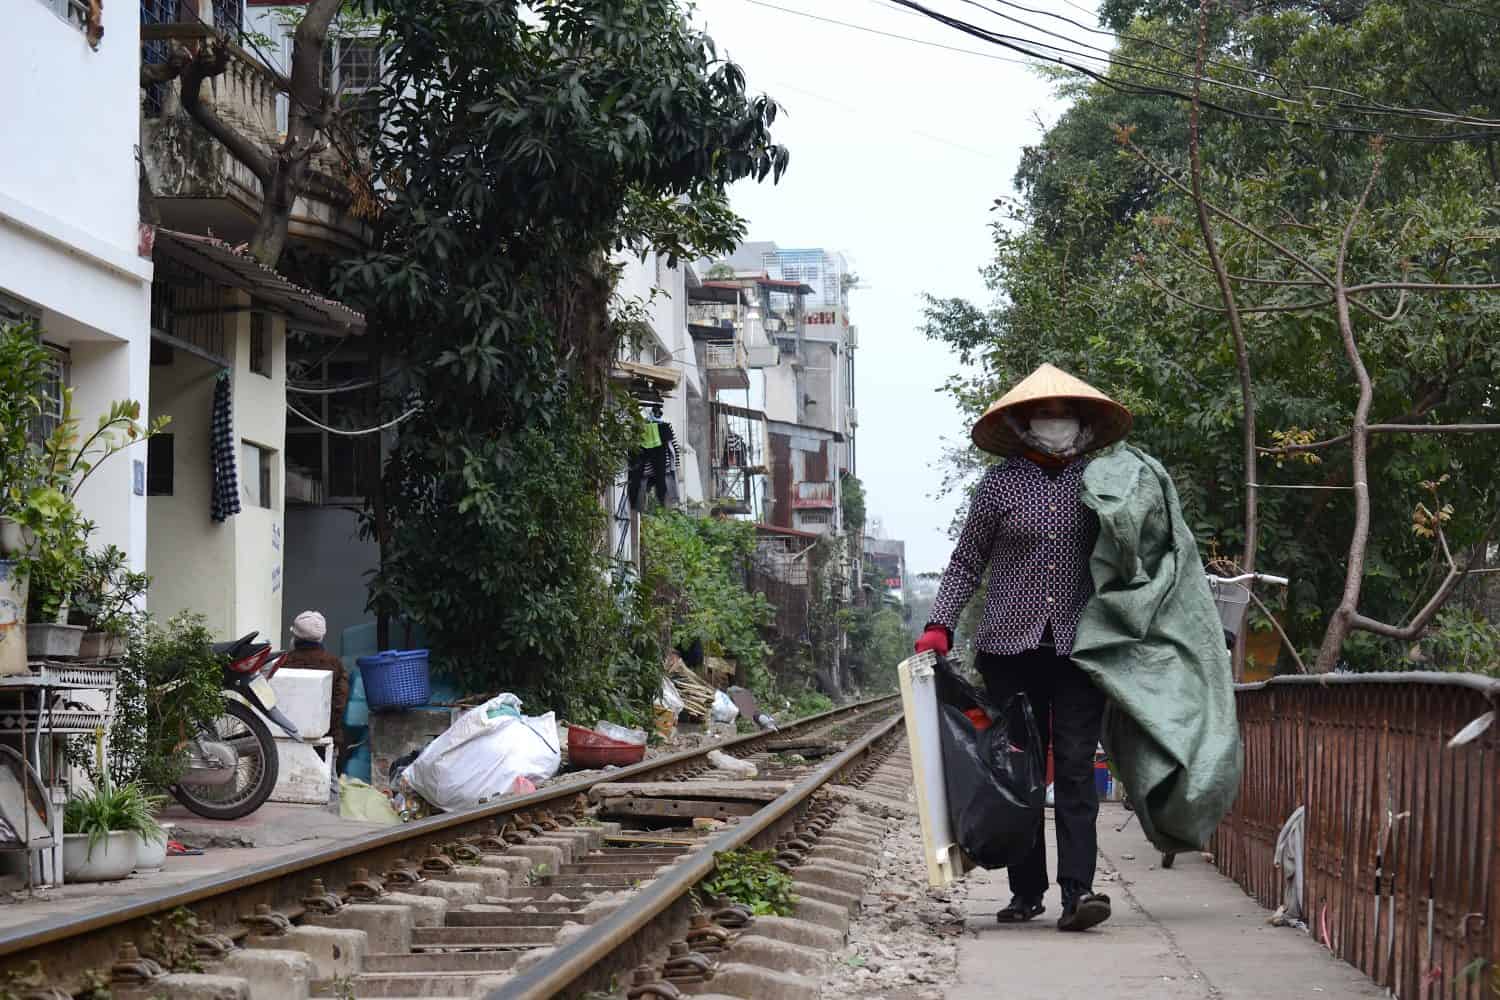 Hanoi's Train Street life: woman at work